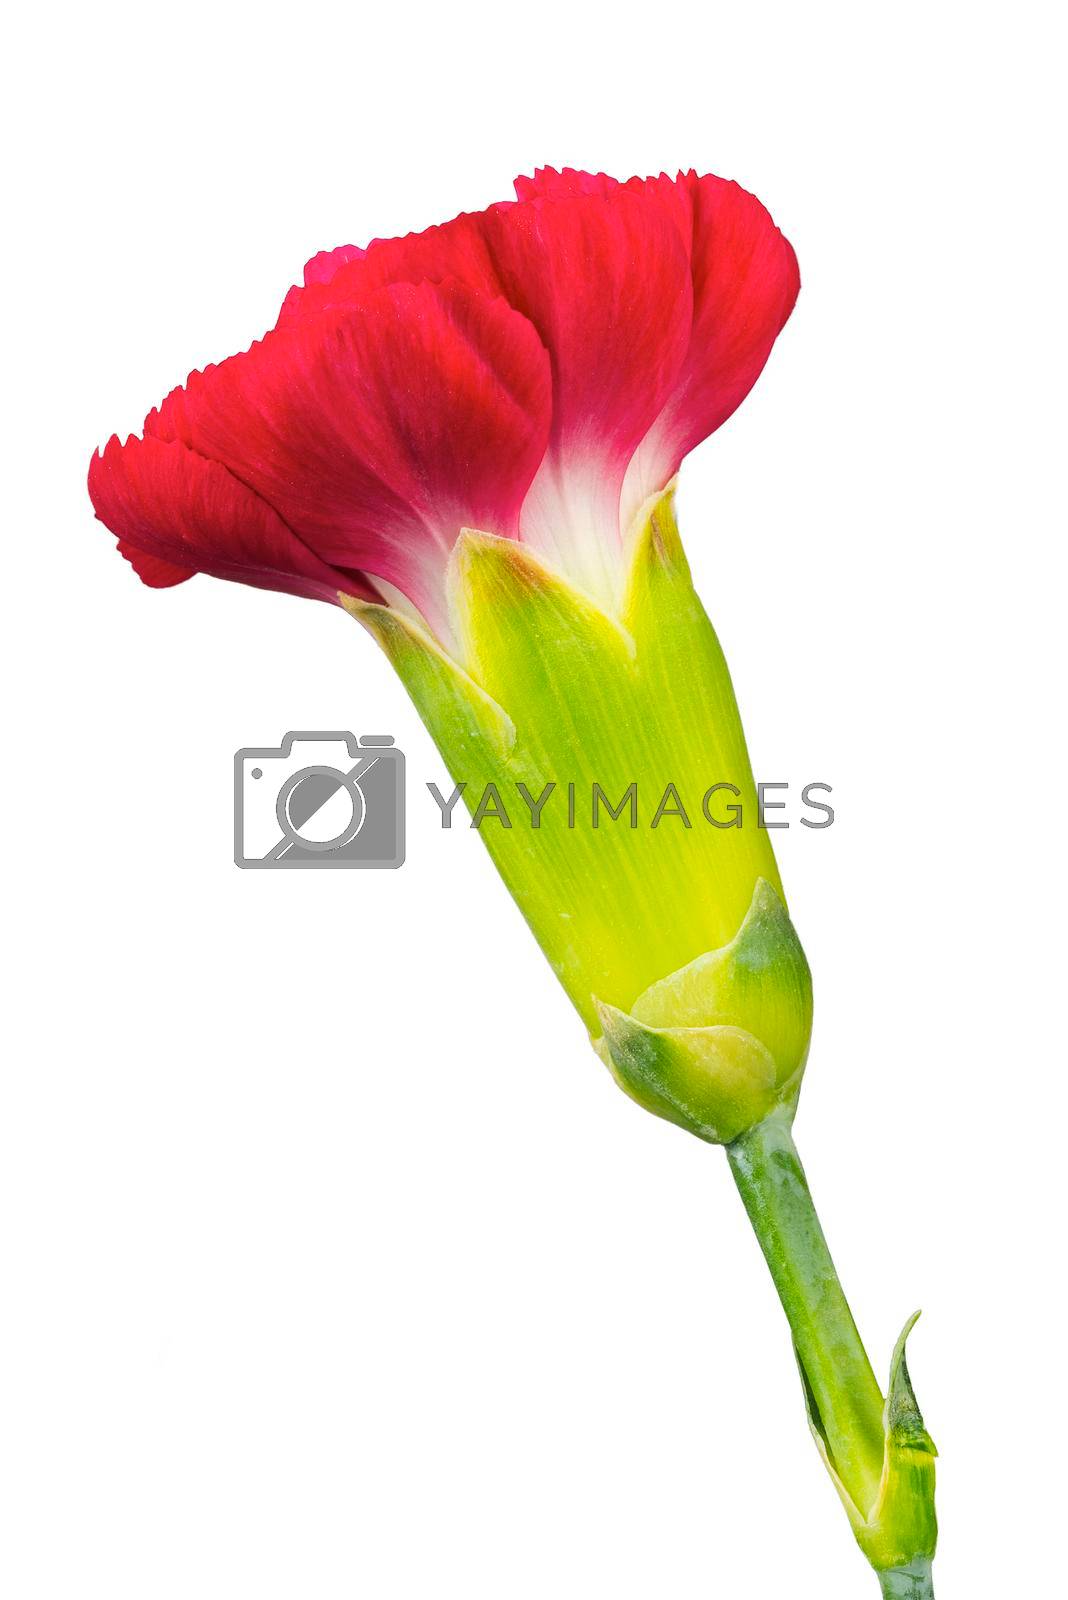 Royalty free image of  One carnation flower by Pavlasek